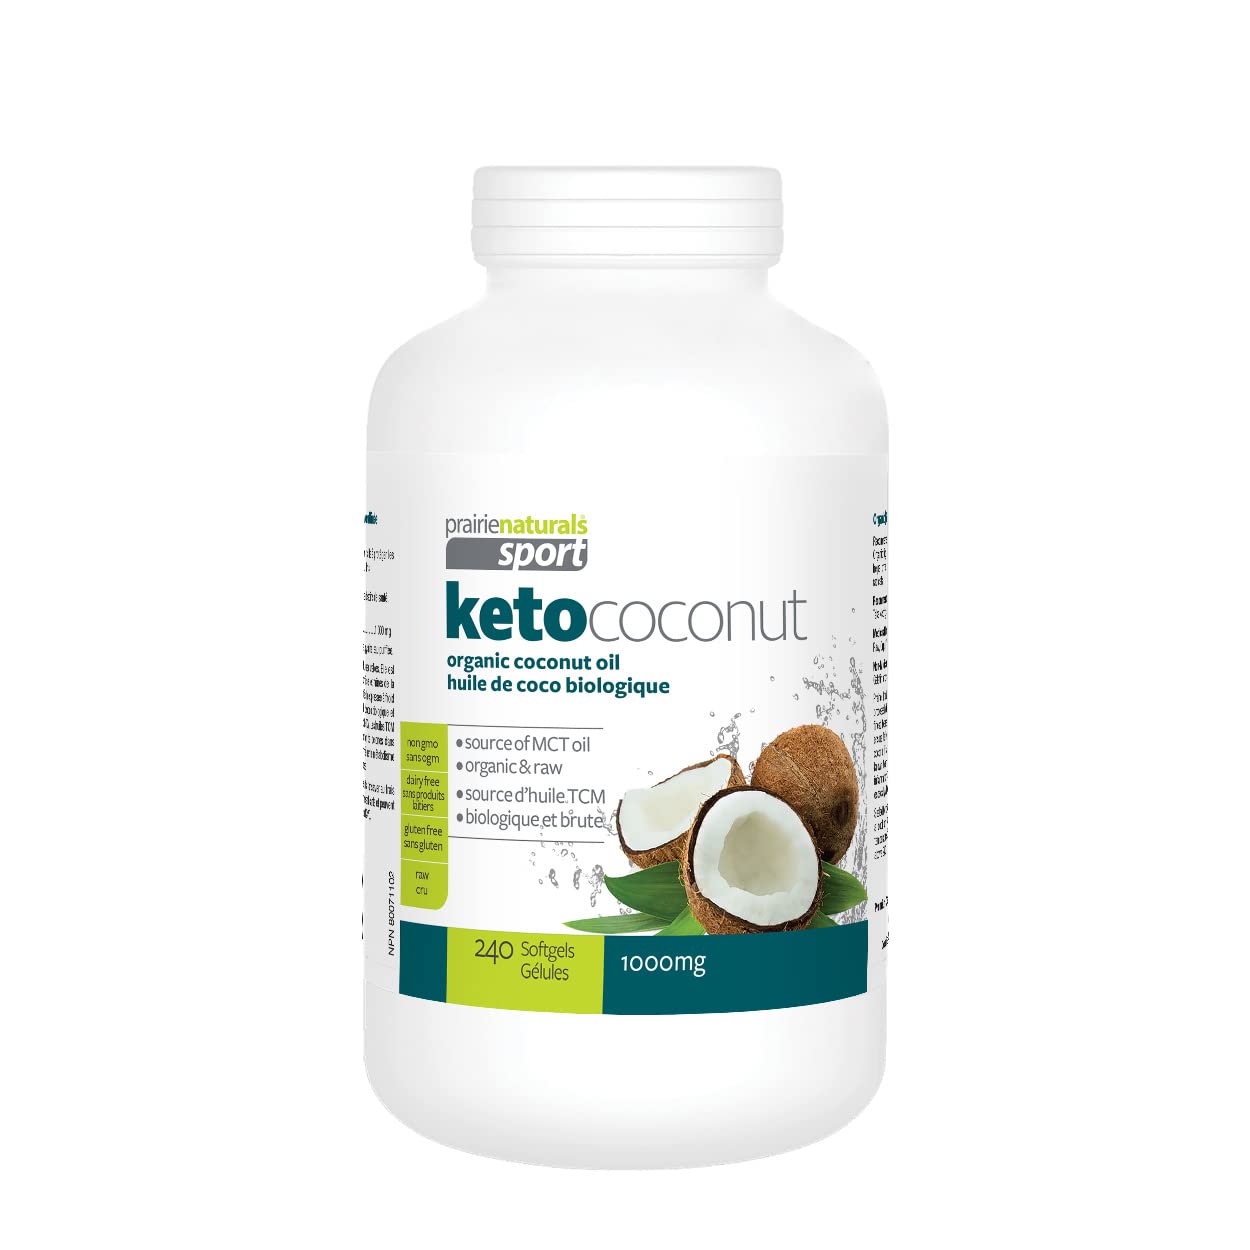 Prairie Naturals Keto Coconut Organic Coconut Oil 1000mg Softgel, 240 Count